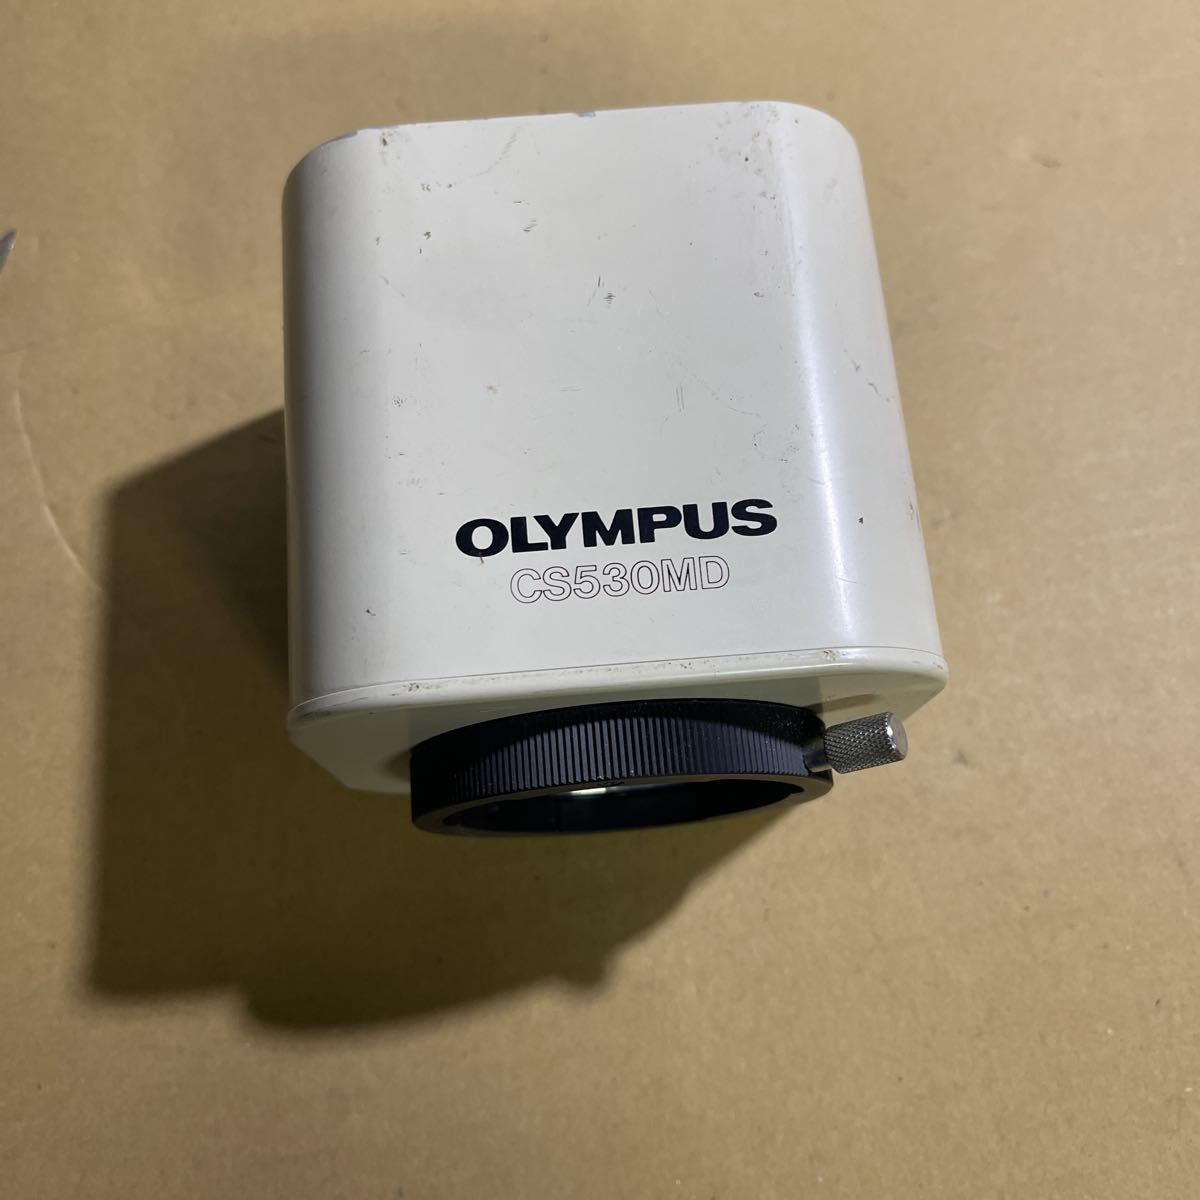 「B367」OLYMPUS オリンパス 生物顕微鏡 カメラユニット CS530MD  現状出品 動作未確認